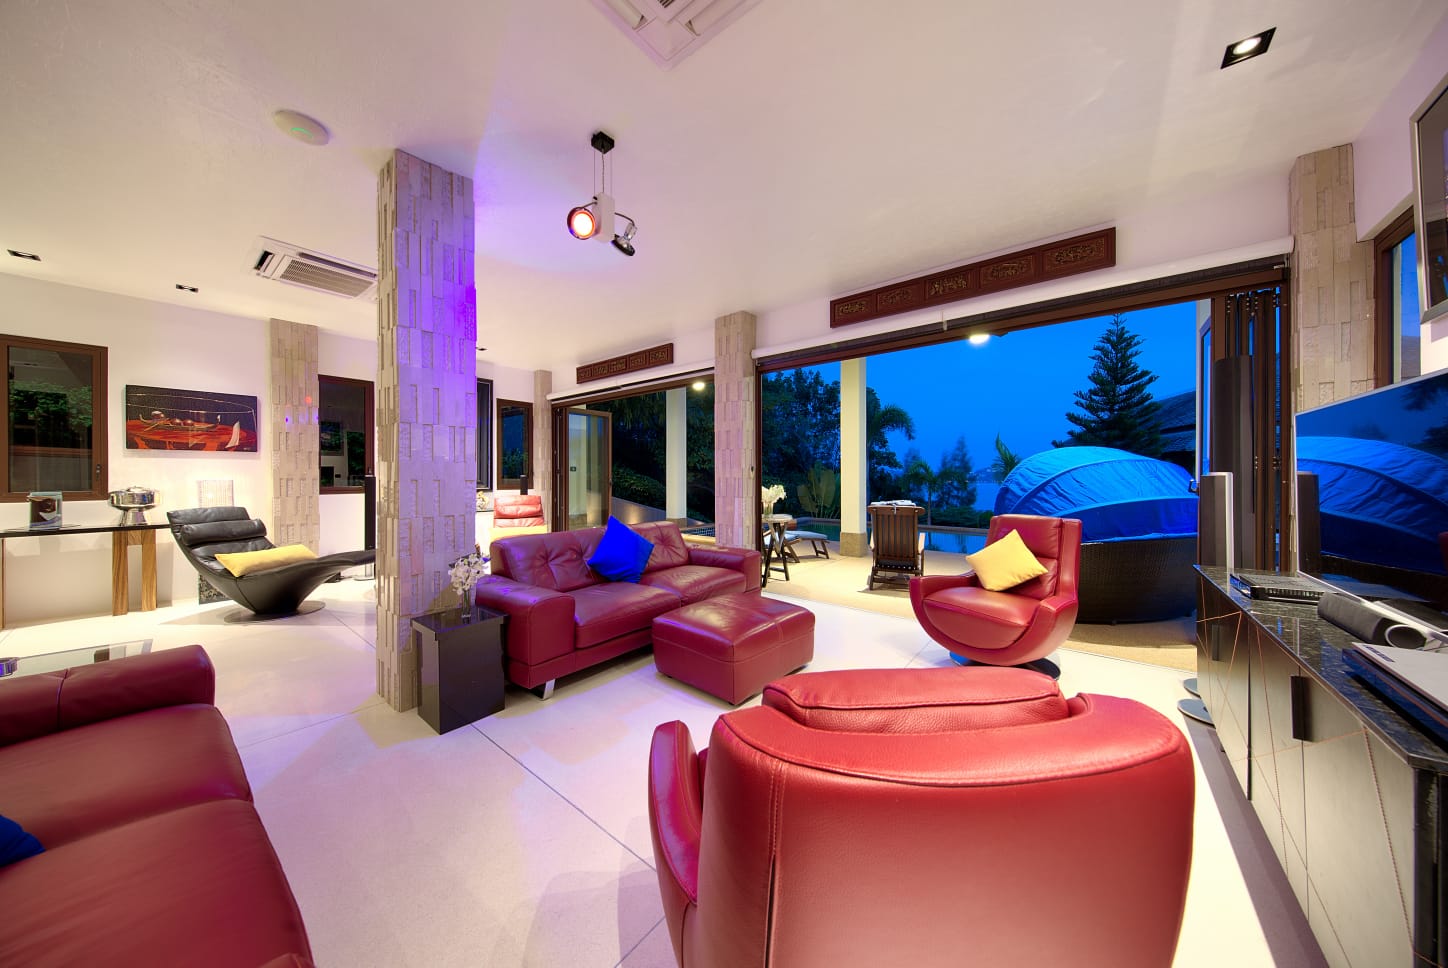 3 Bed Sea View Villa For Sale Bangrak Bay, Koh Samui (Thai-Real.com)